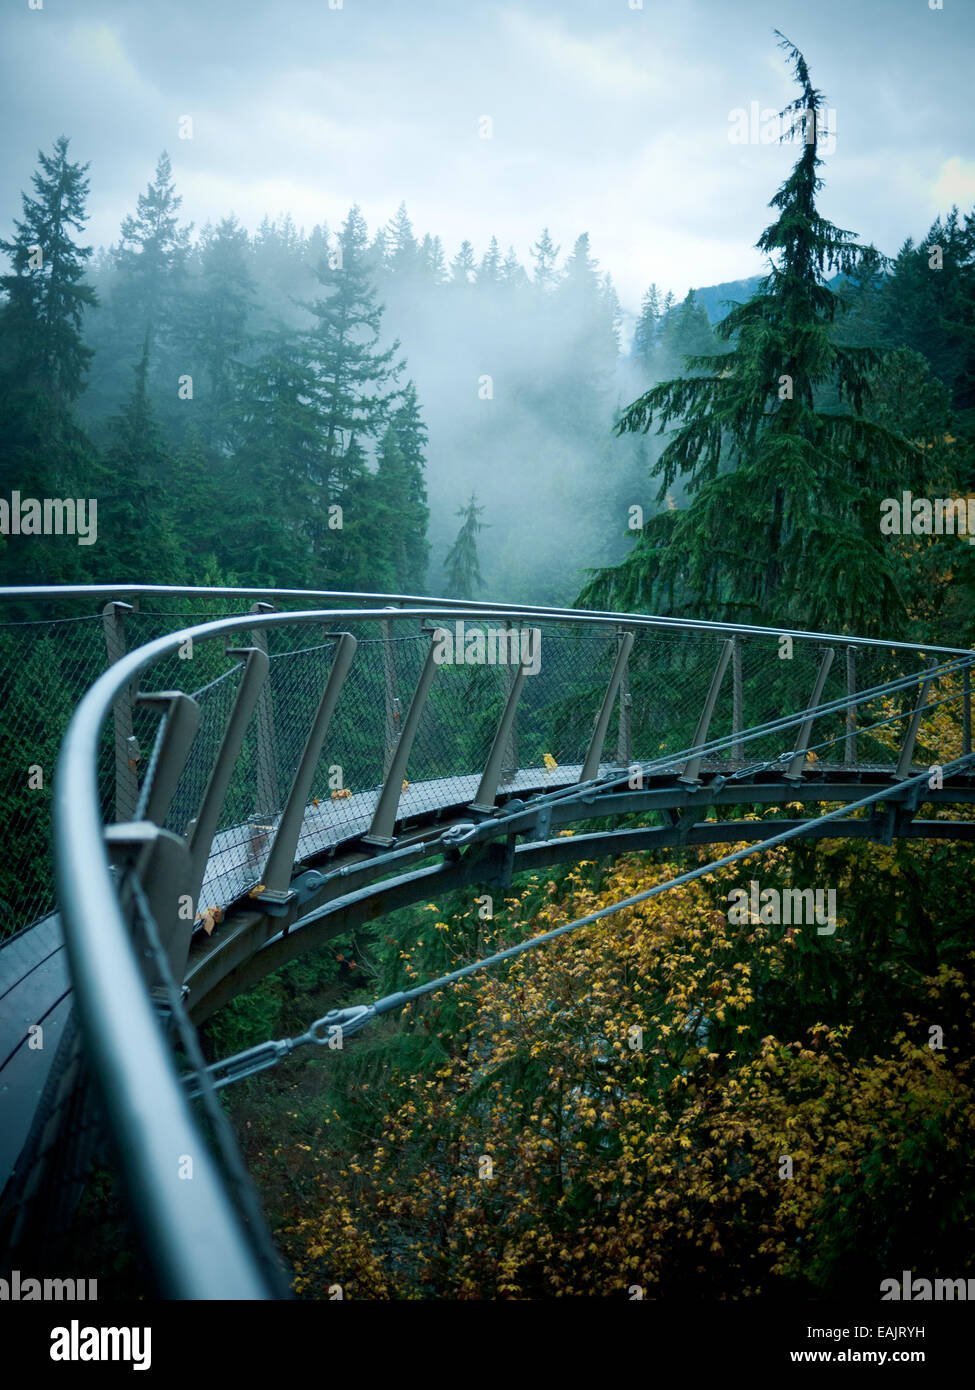 A view of the Cliffwalk attraction at Capilano Suspension Bridge Park in North Vancouver, British Columbia, Canada. Stock Photo